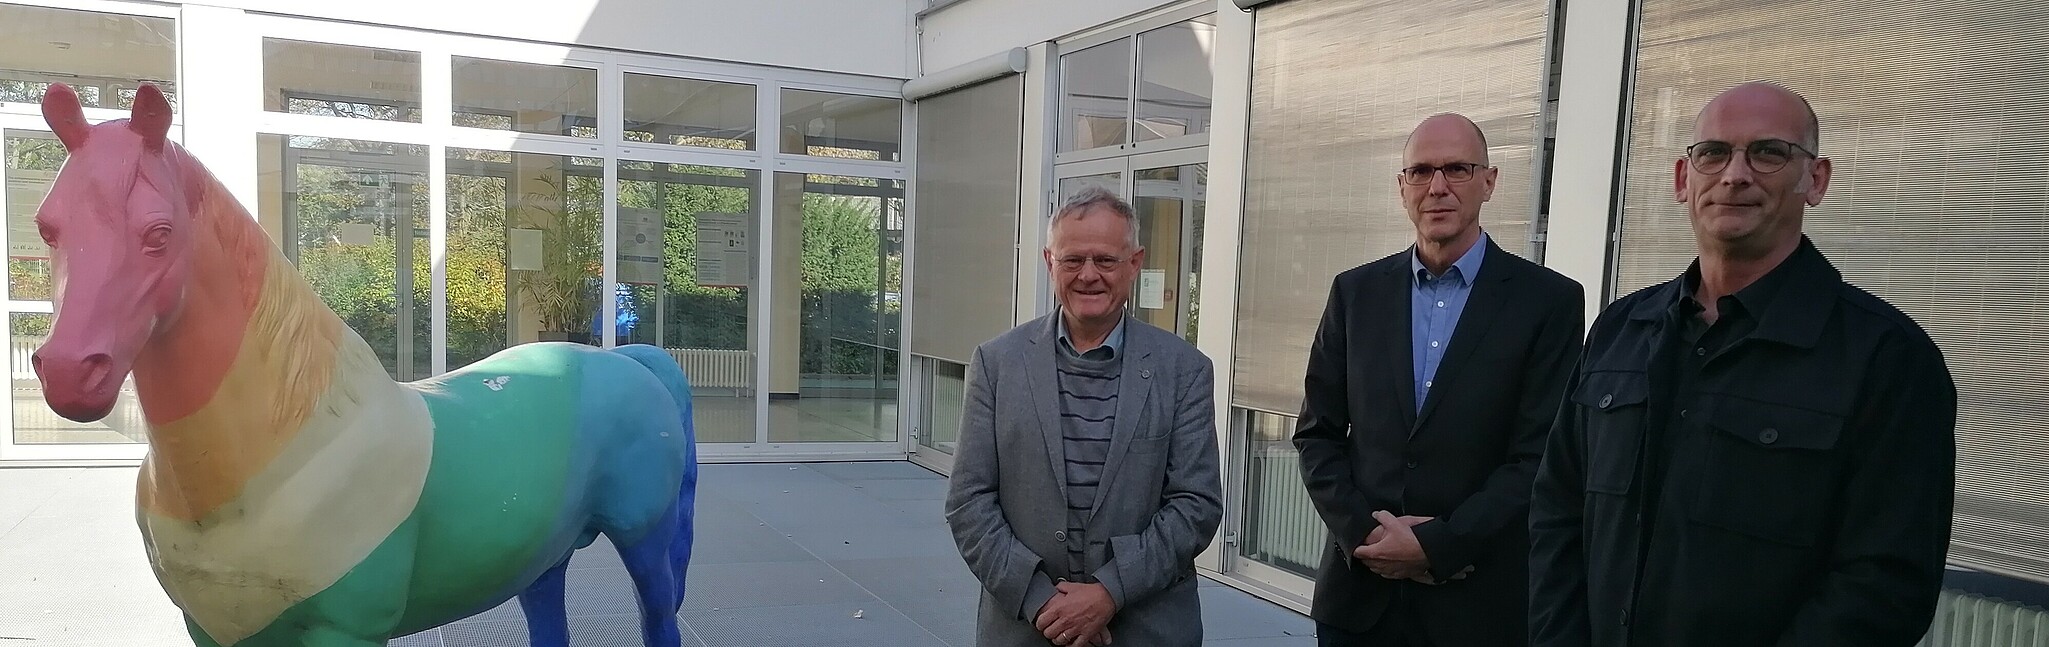 Prof. Dr. Armin Grau, Member of the German Bundestag, University President Prof. Dr. Gunther Piller and the head of the bachelor's degree program in nursing, Prof. Dr. Joachim von der Heide, in the courtyard of HWG LU.